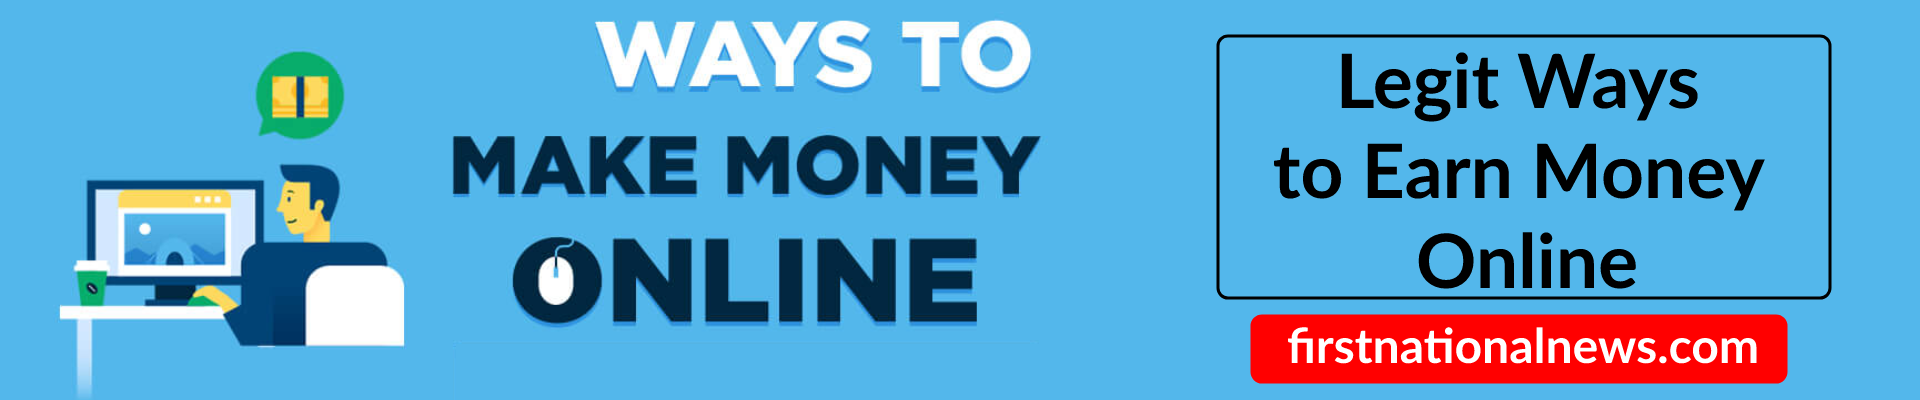 Legit Ways to Earn Money Online